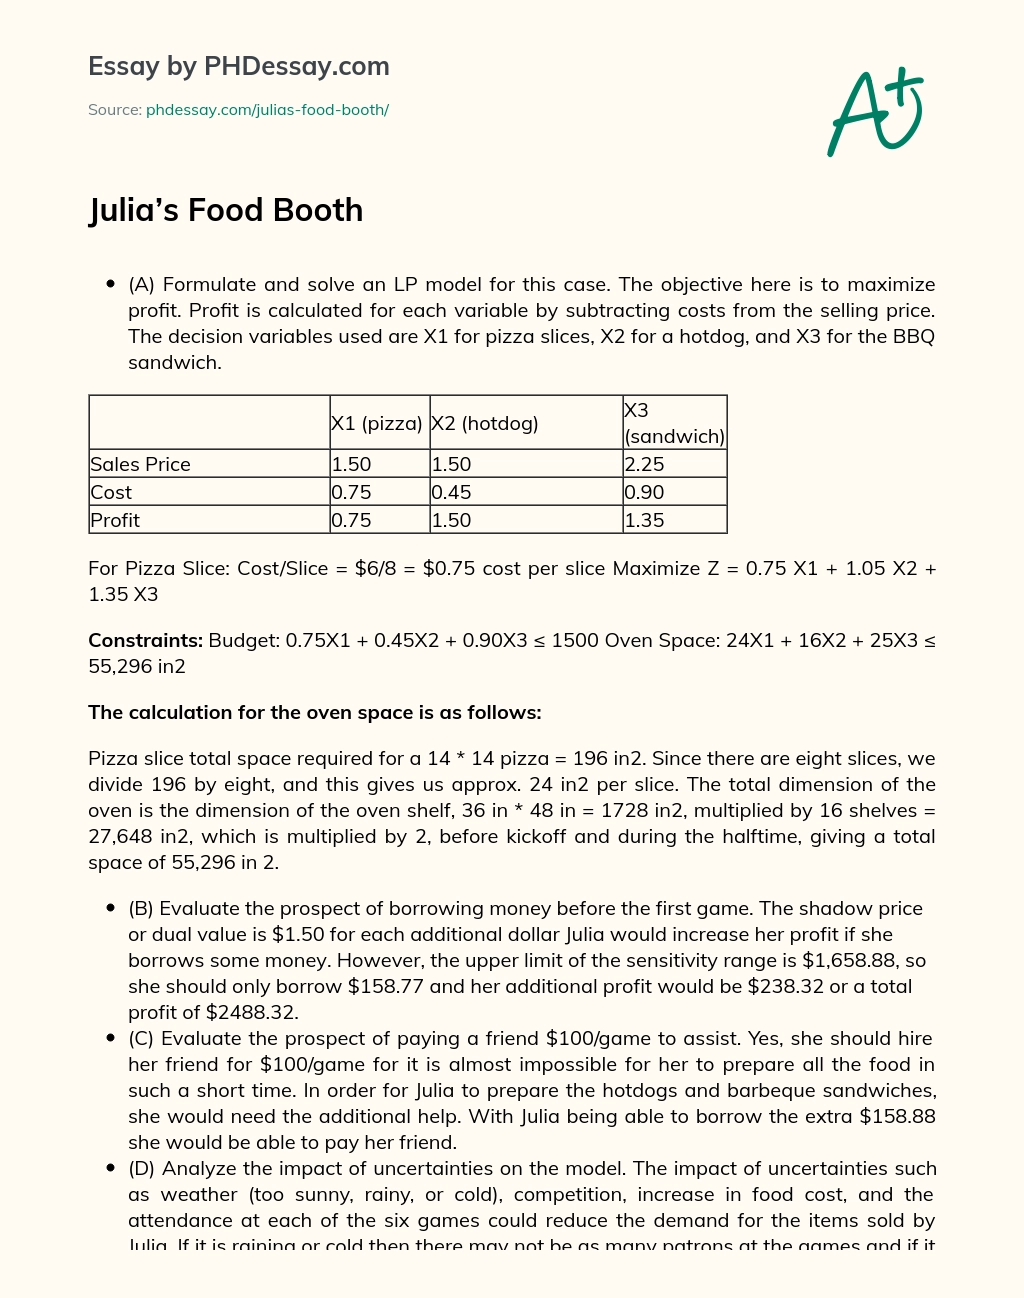 Julia’s Food Booth essay